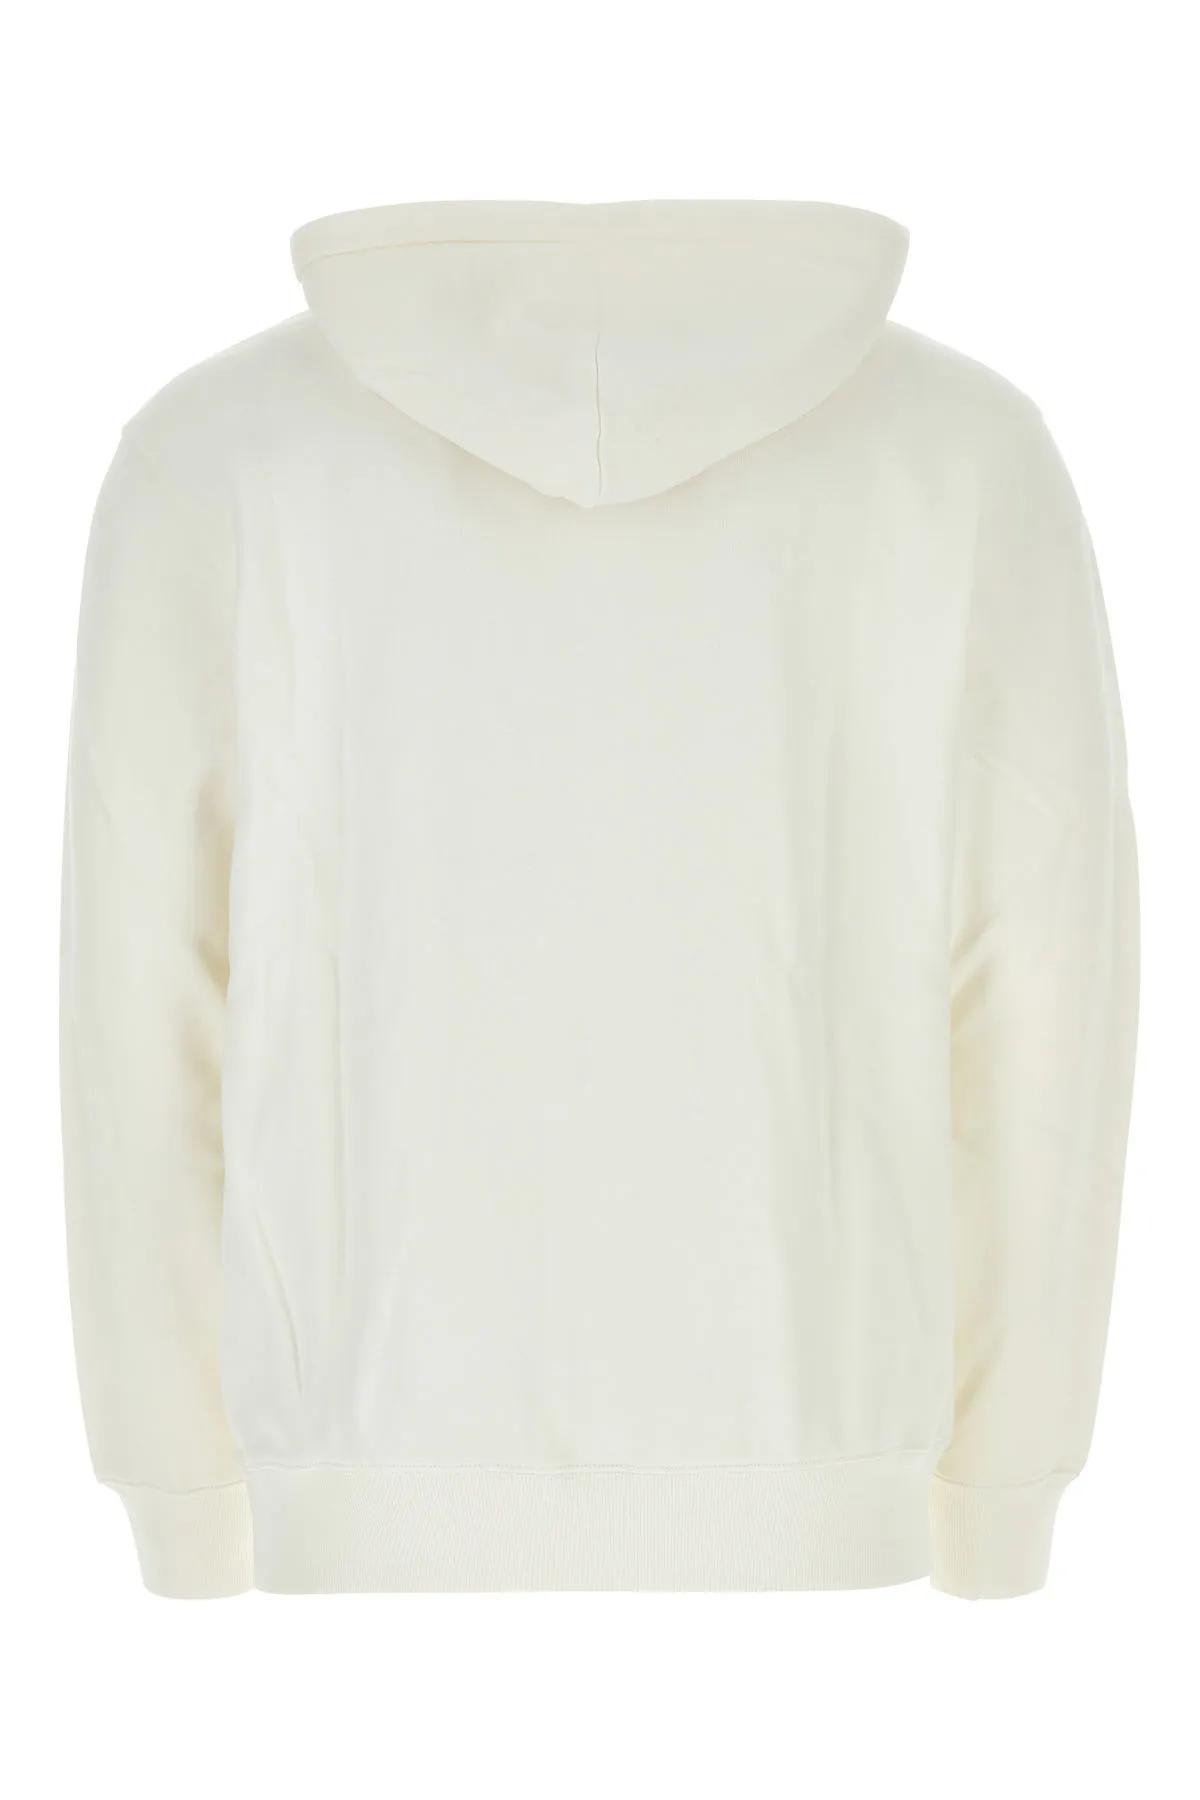 Shop Carhartt White Cotton Hooded Duster Sweatshirt In Gd Wax Garment